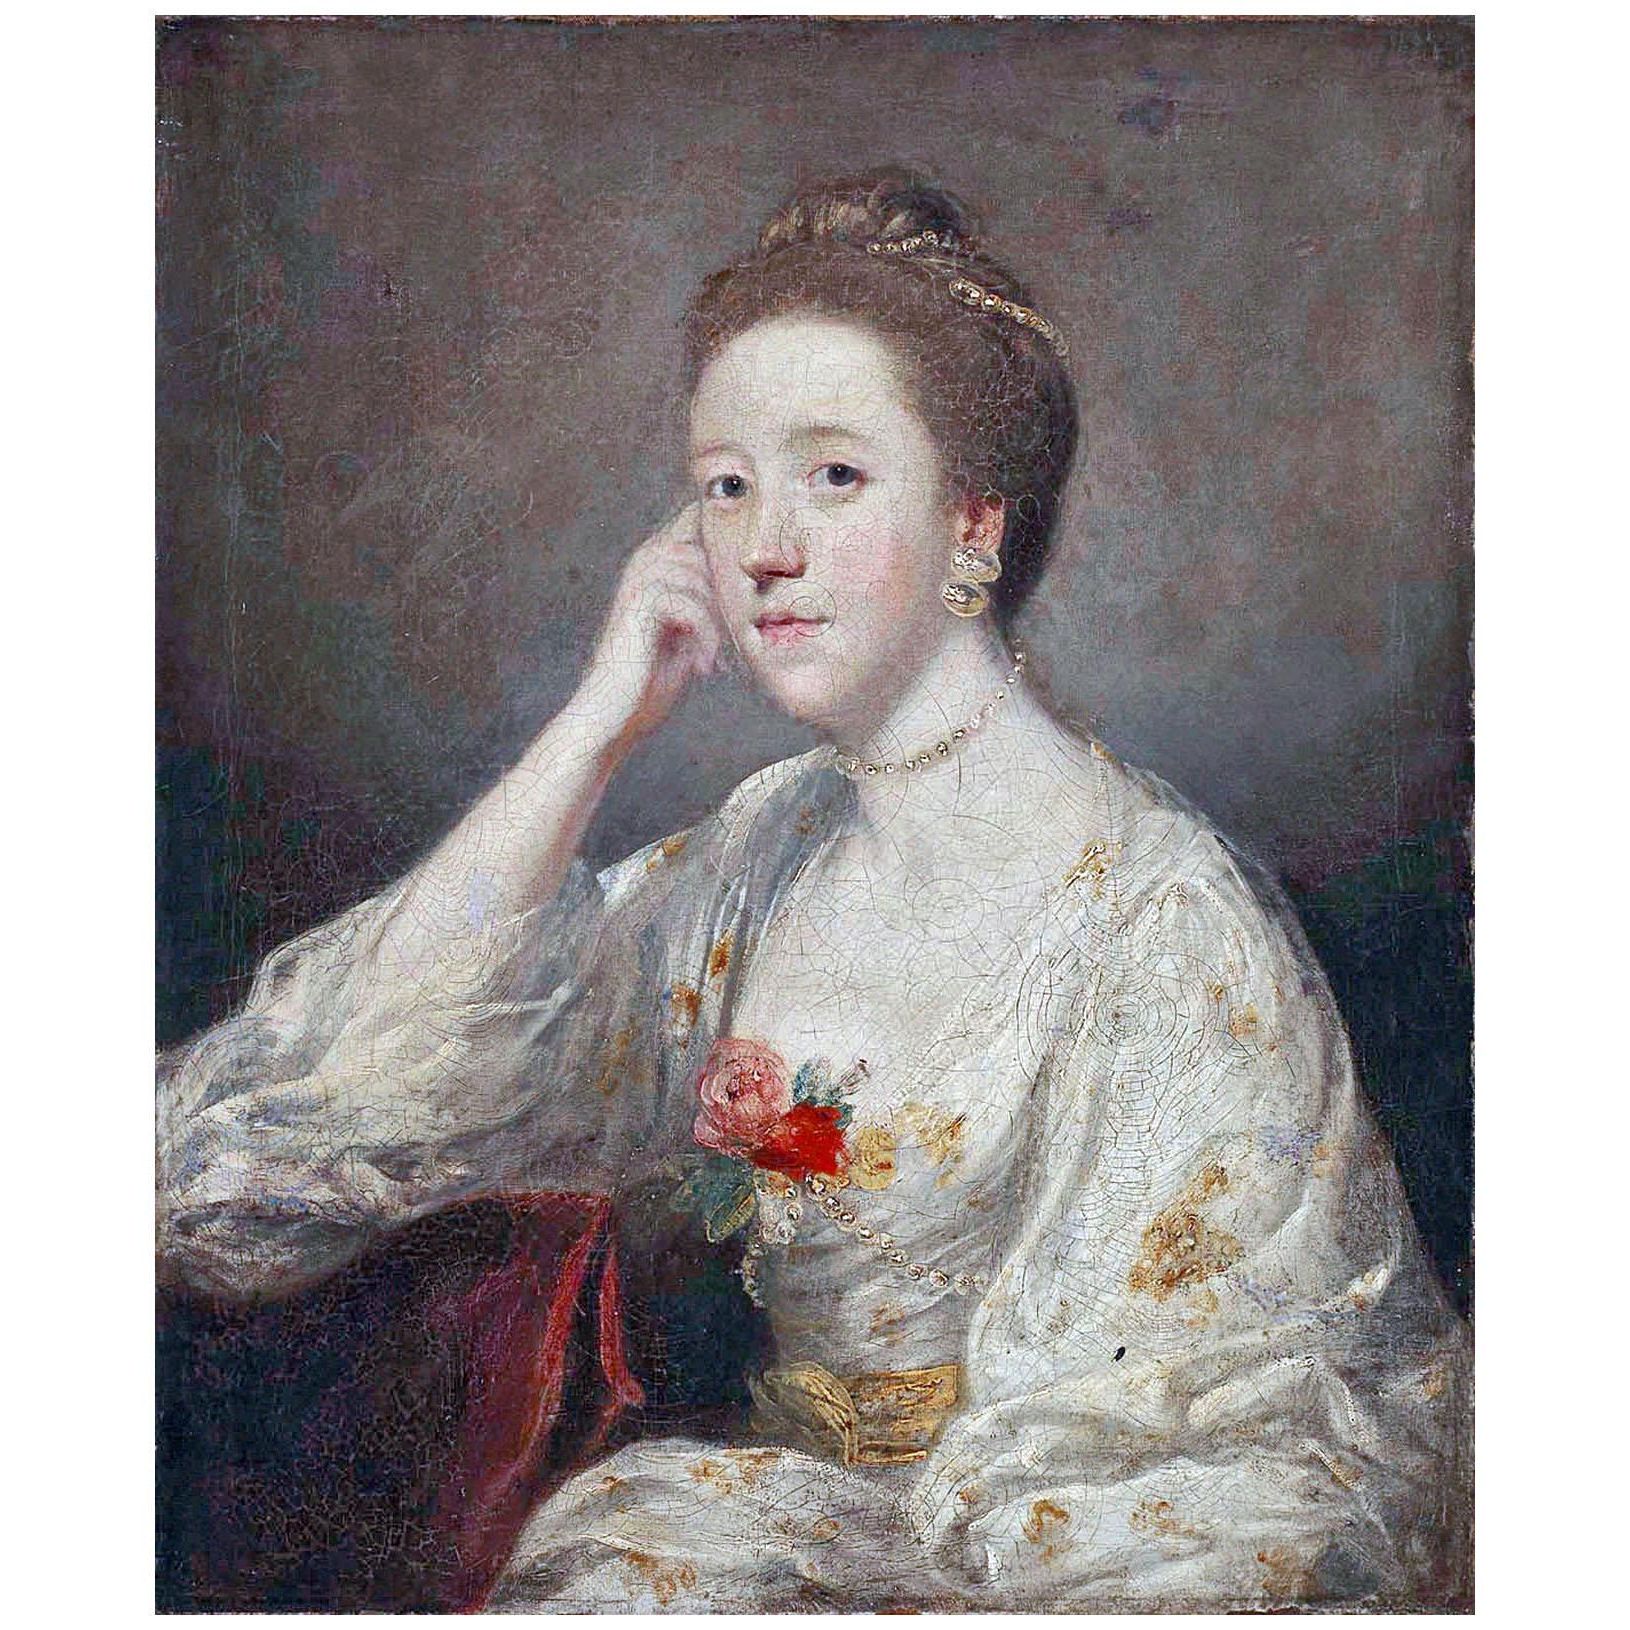 Joshua Reynolds. Lady in White. 1762. Smithsonian Art Museum. Washington